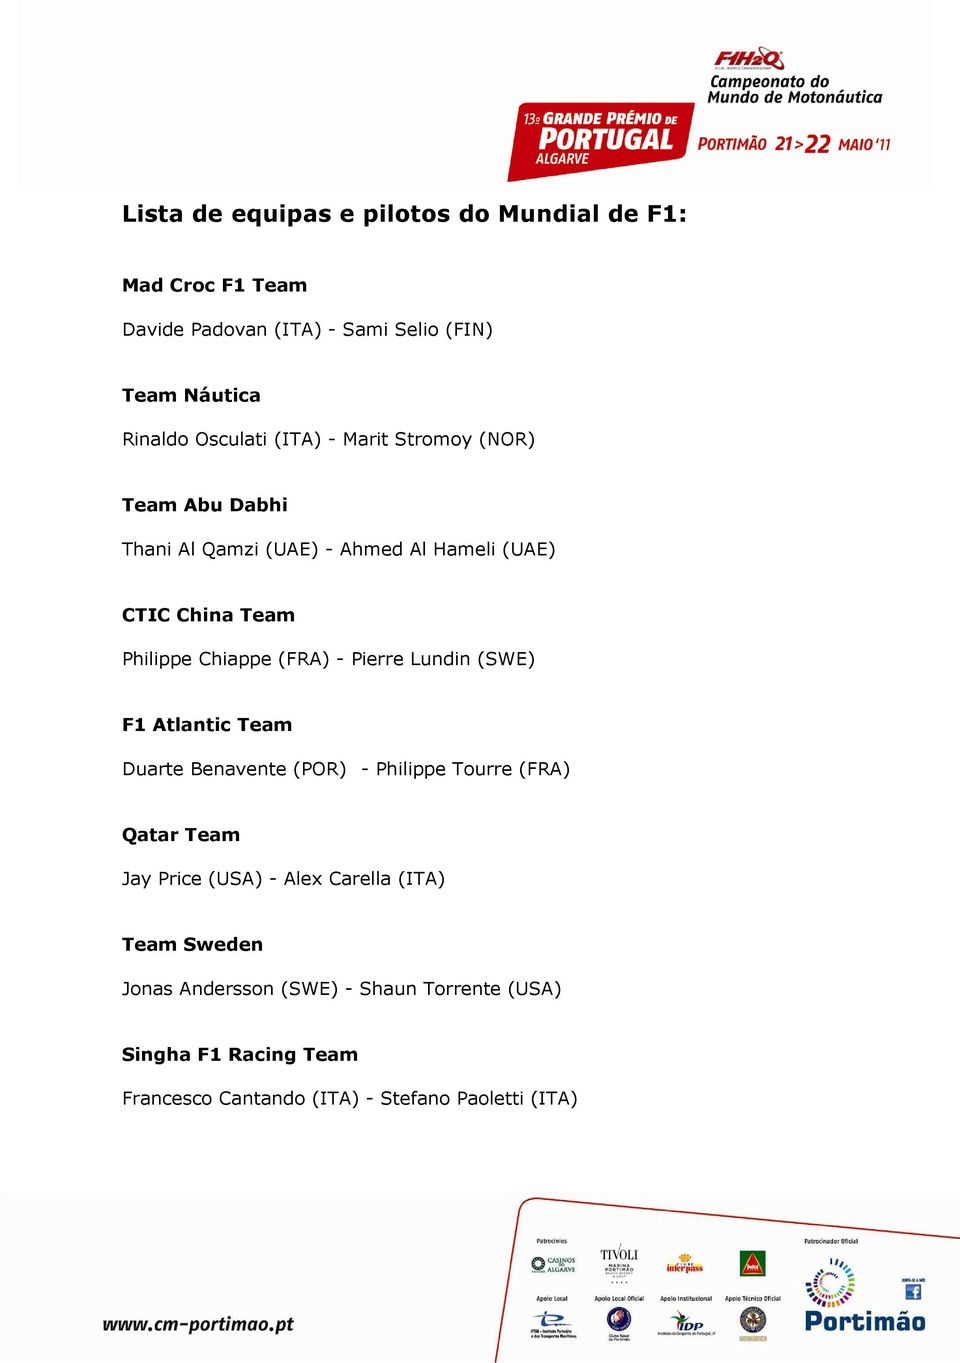 (FRA) - Pierre Lundin (SWE) F1 Atlantic Team Duarte Benavente (POR) - Philippe Tourre (FRA) Qatar Team Jay Price (USA) - Alex